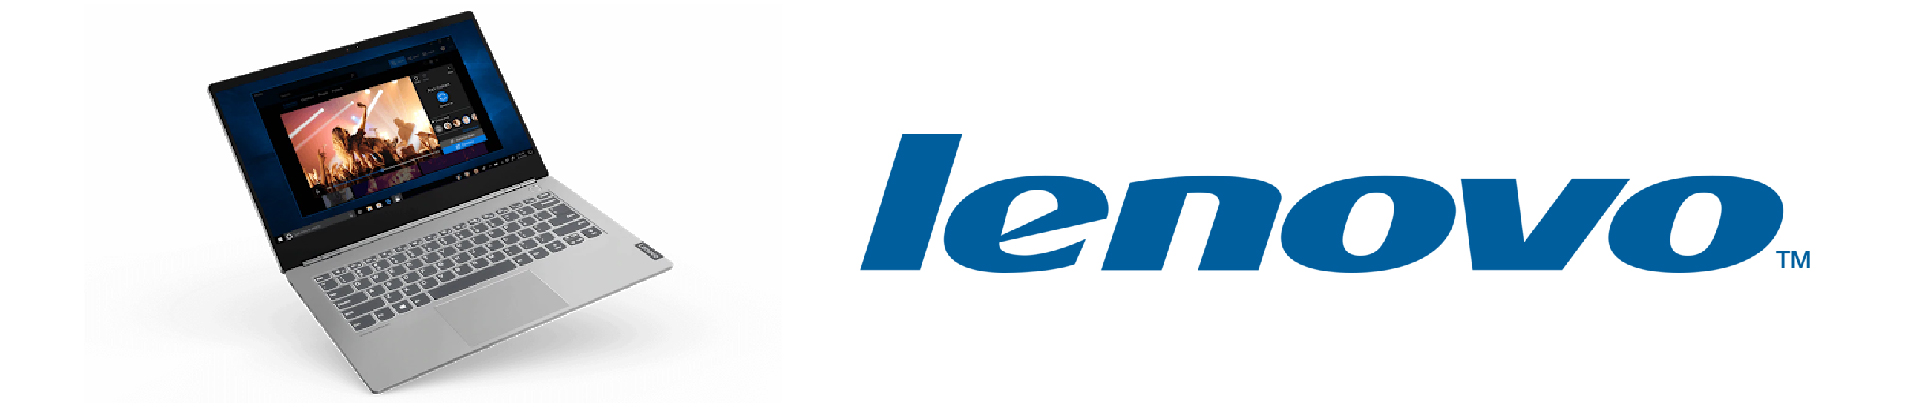 Lenovo authorized service center in Dubai